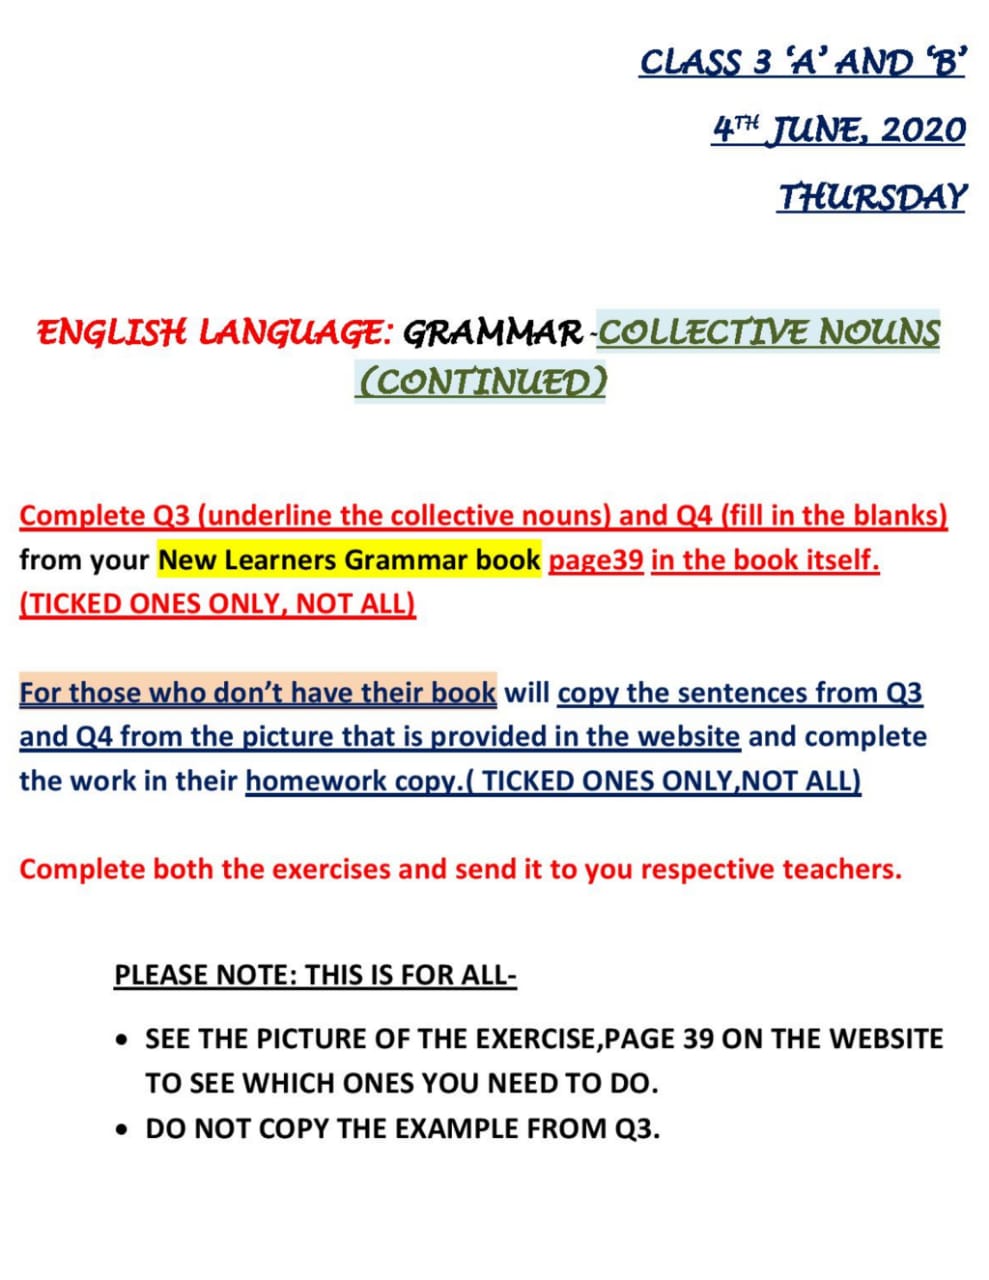 Language Homework Q3 3